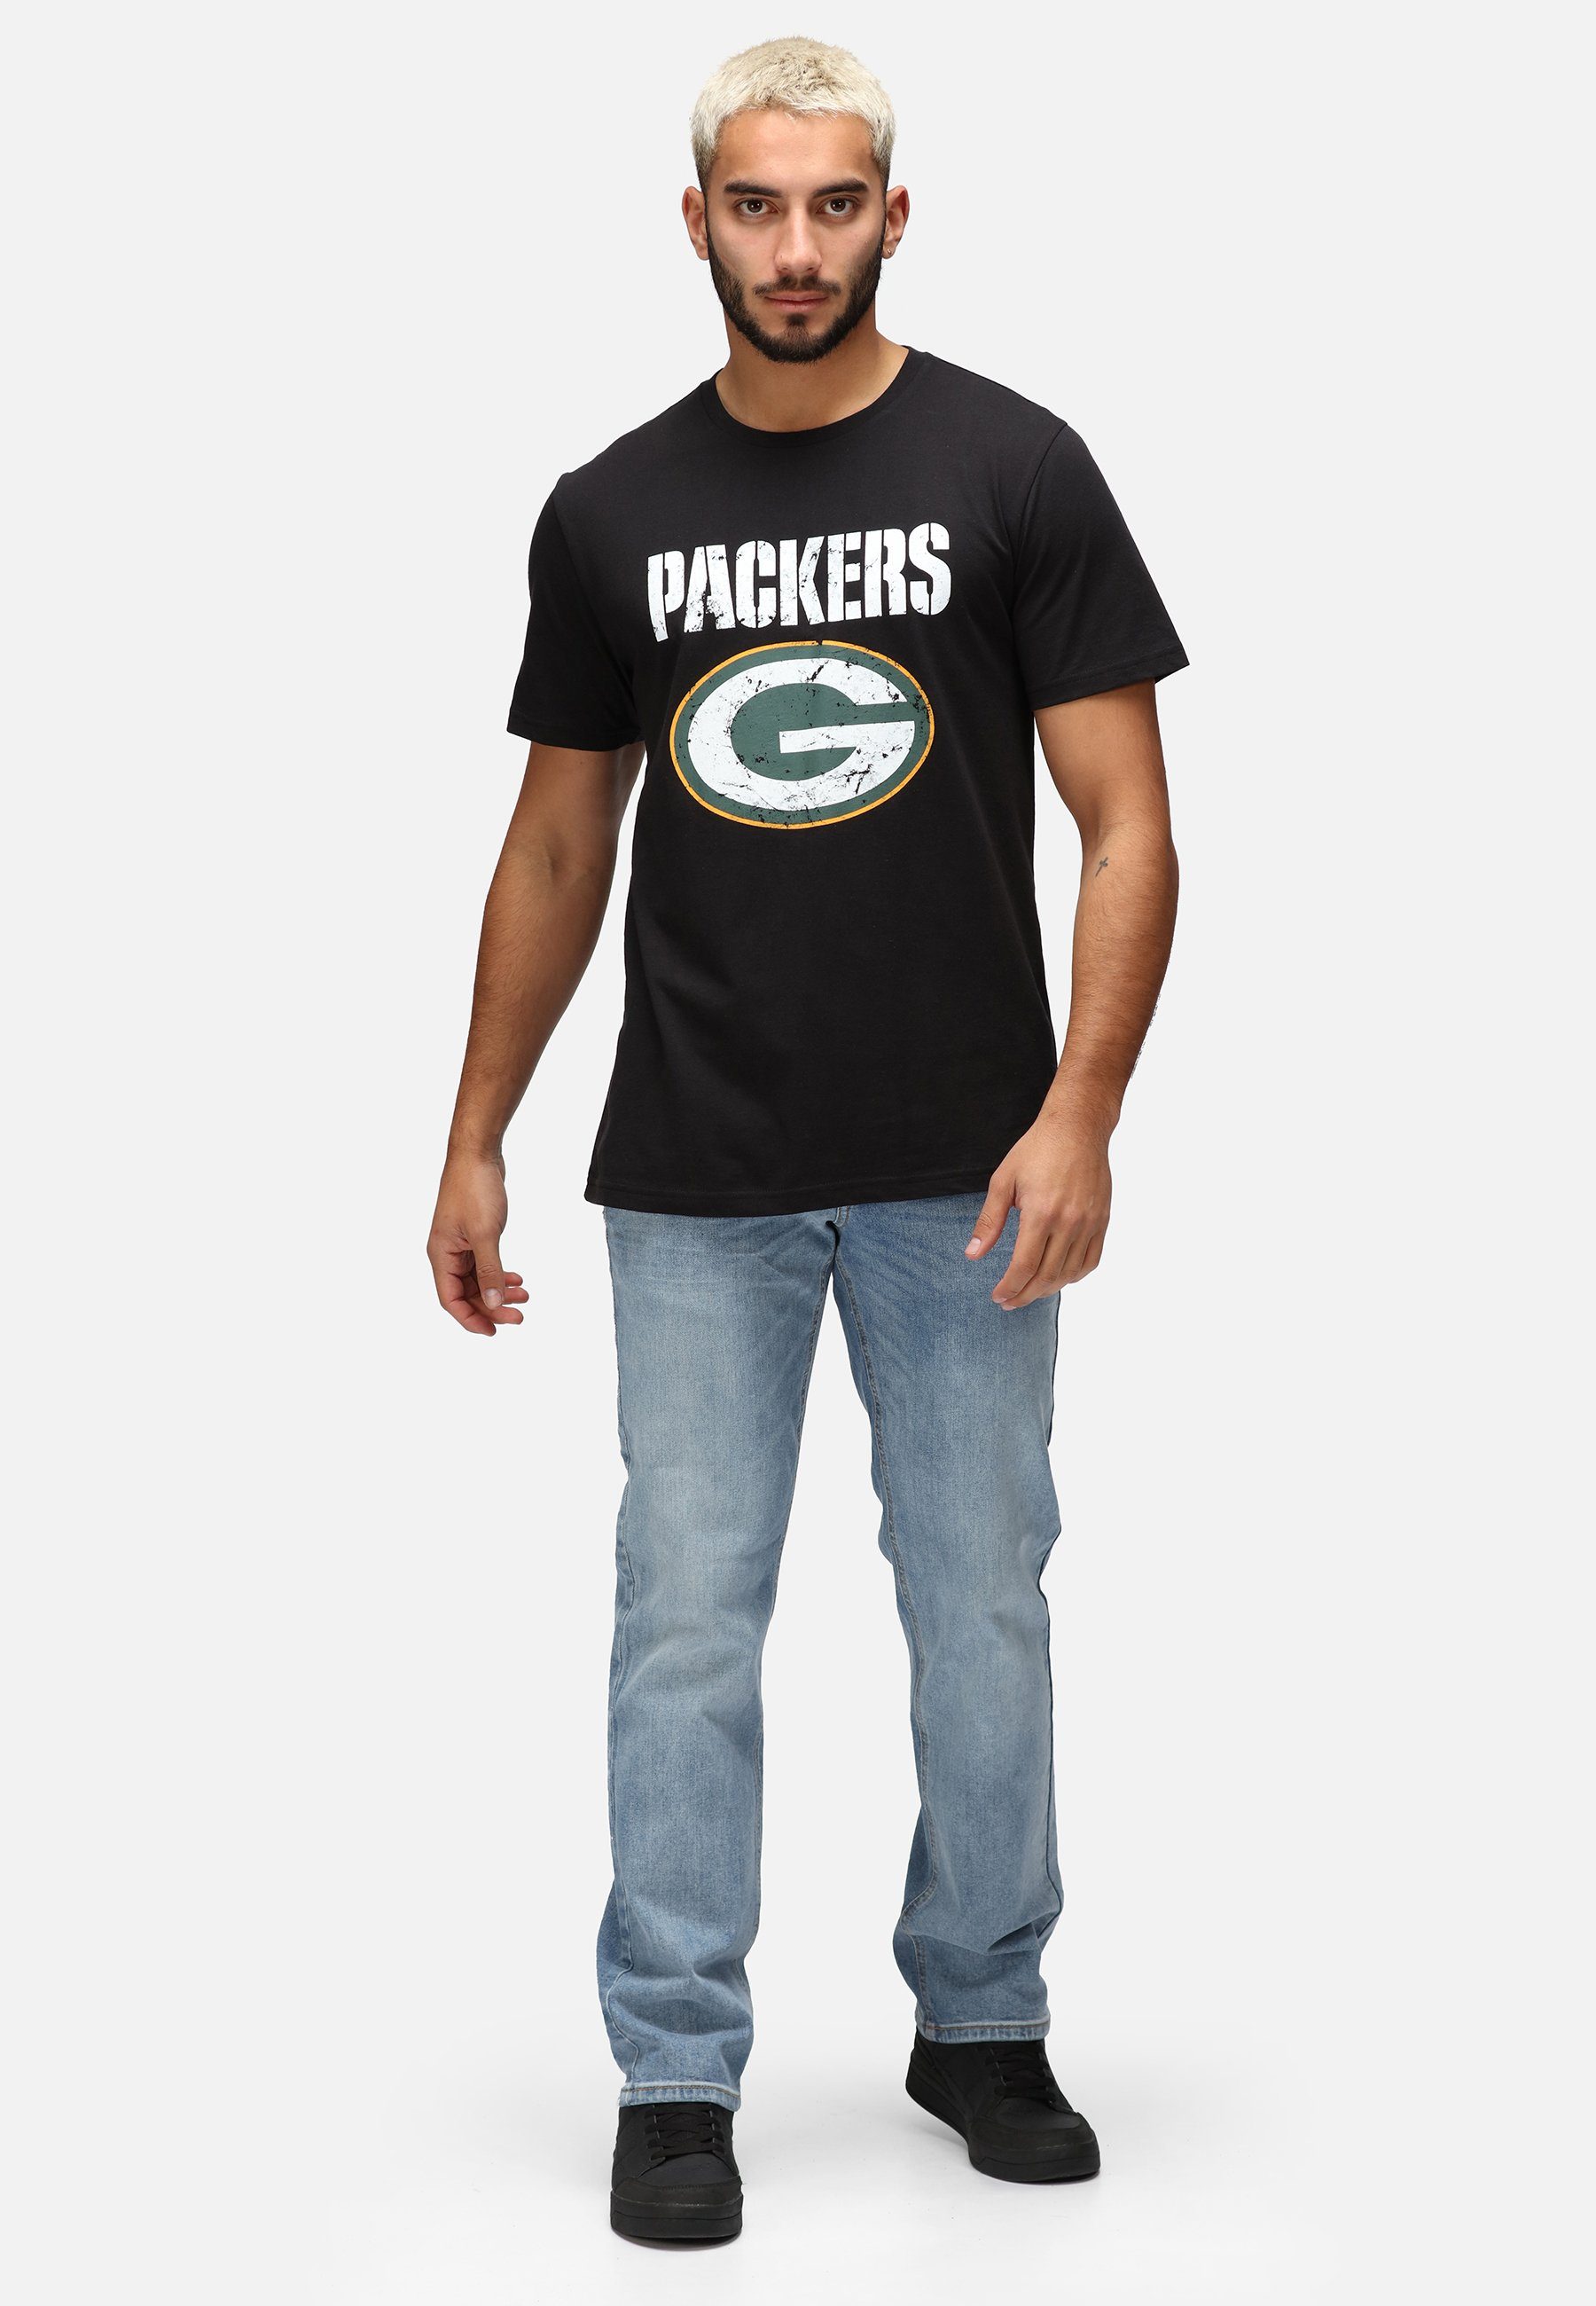 LOGO Recovered zertifizierte Bio-Baumwolle PACKERS GOTS T-Shirt NFL